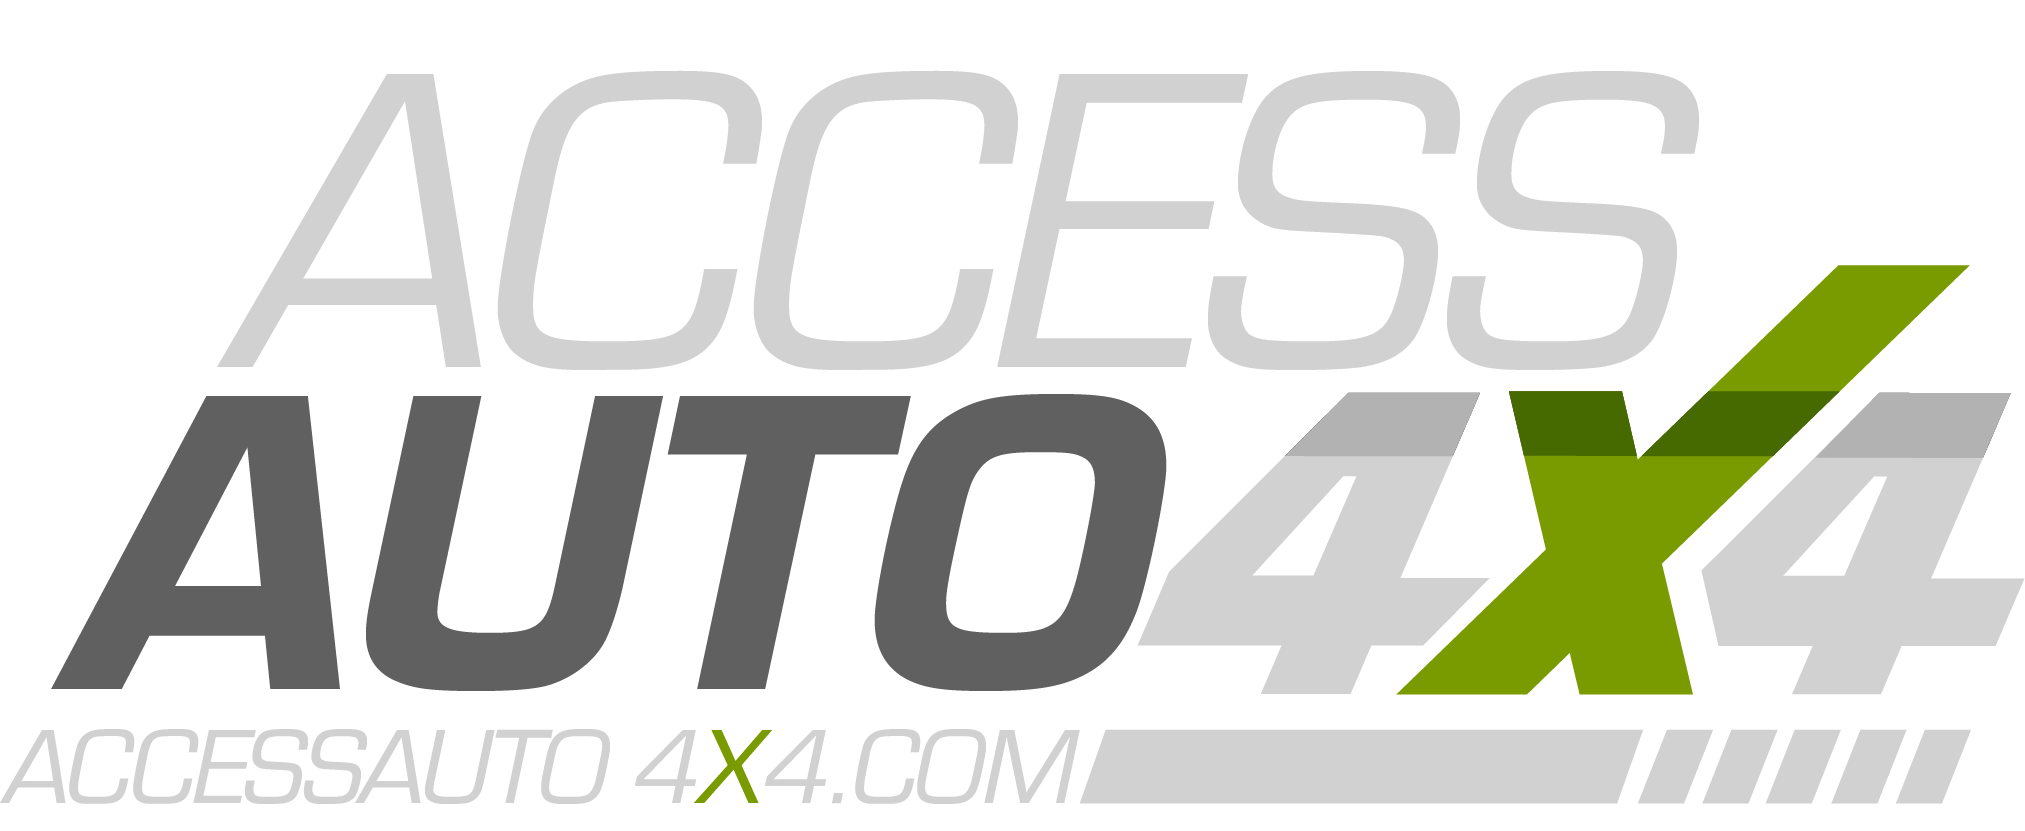 Accessauto4x4 logo